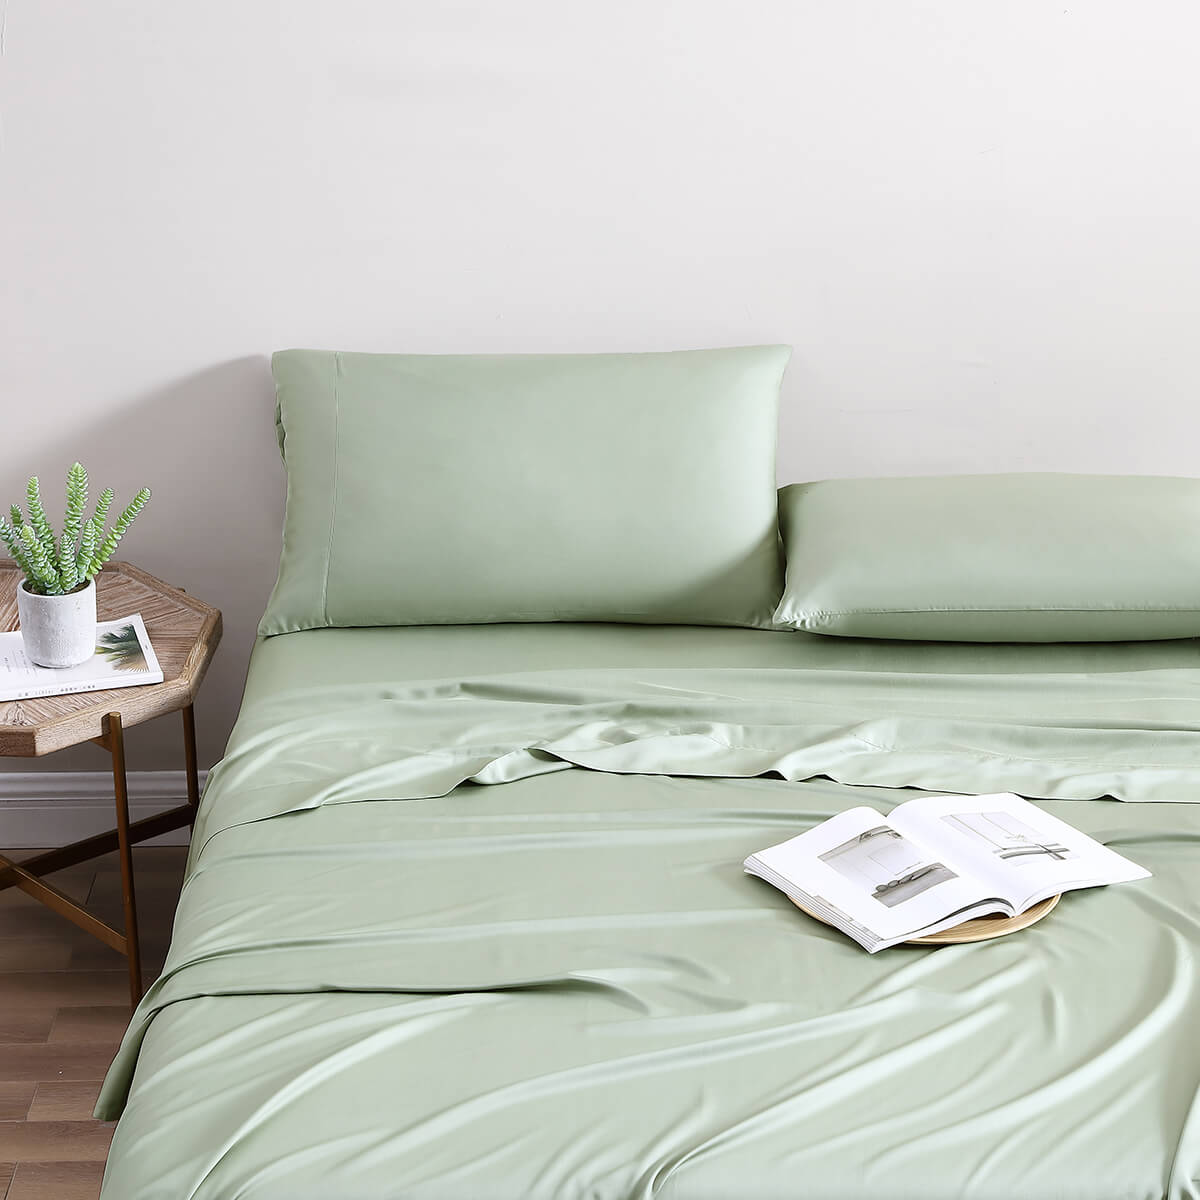 Premium Bamboo Sheet Set. Bamboo bedding. Bamboo sheets. Eco-friendly sheets. Sustainable sheets. Sustainable bedding. Sustainable home essentials. Bamboo products. Sage Green bedding.